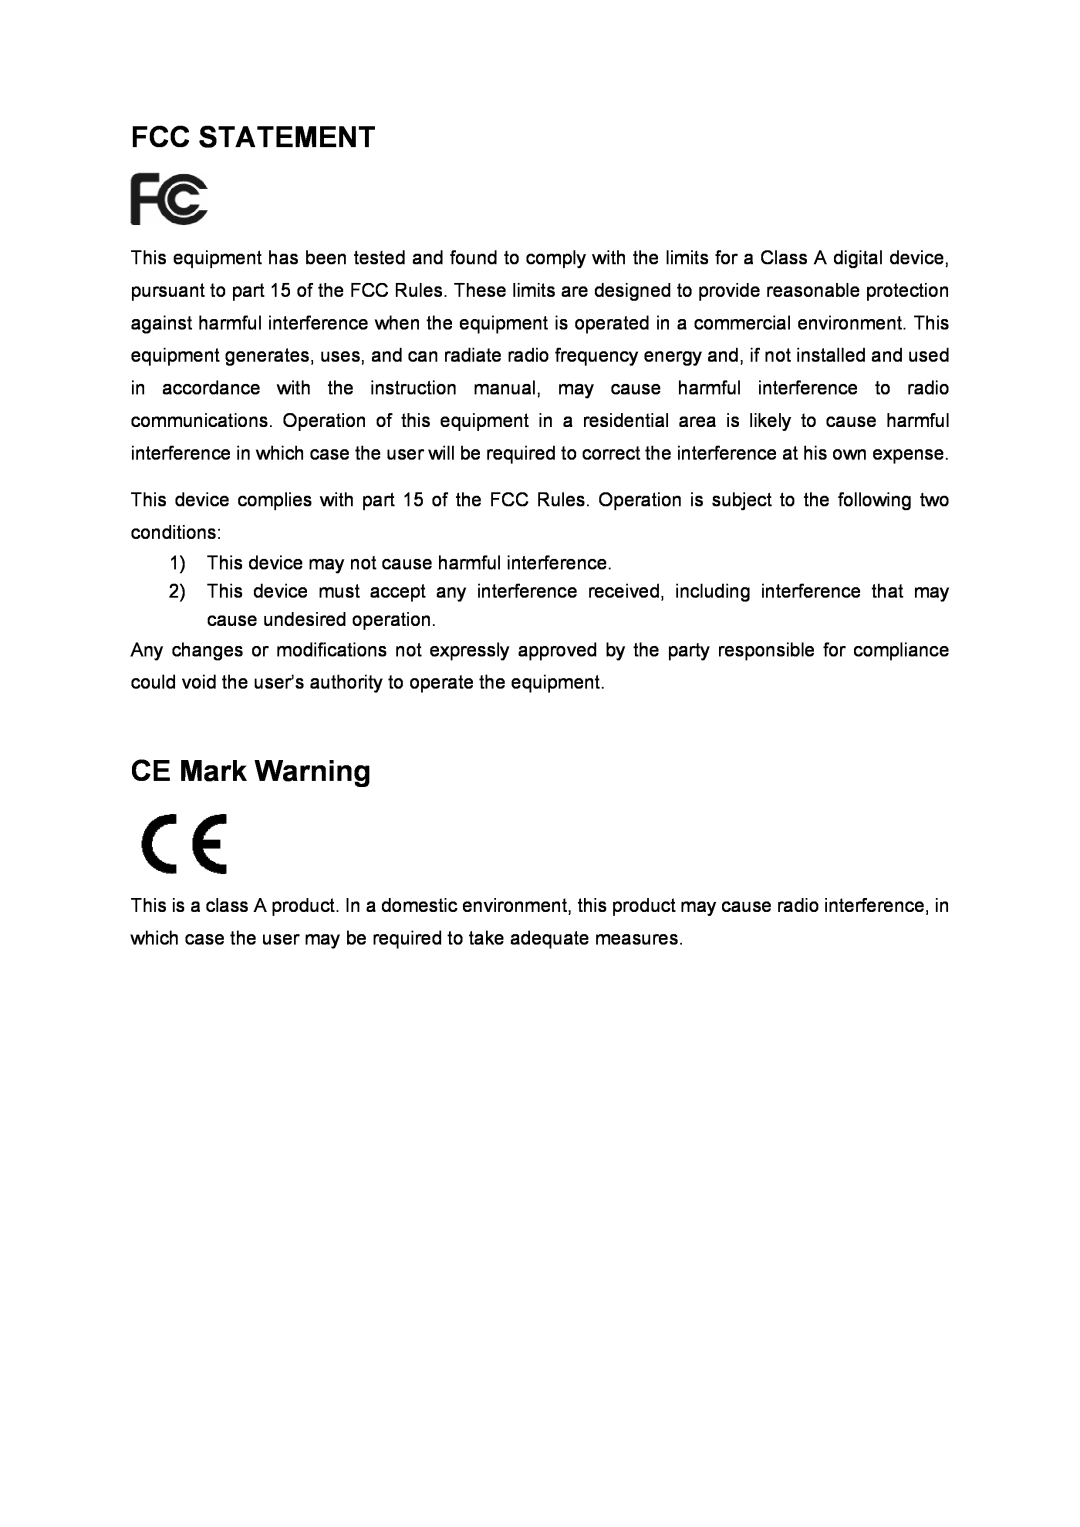 TP-Link TL-R480T+ manual Fcc Statement, CE Mark Warning 